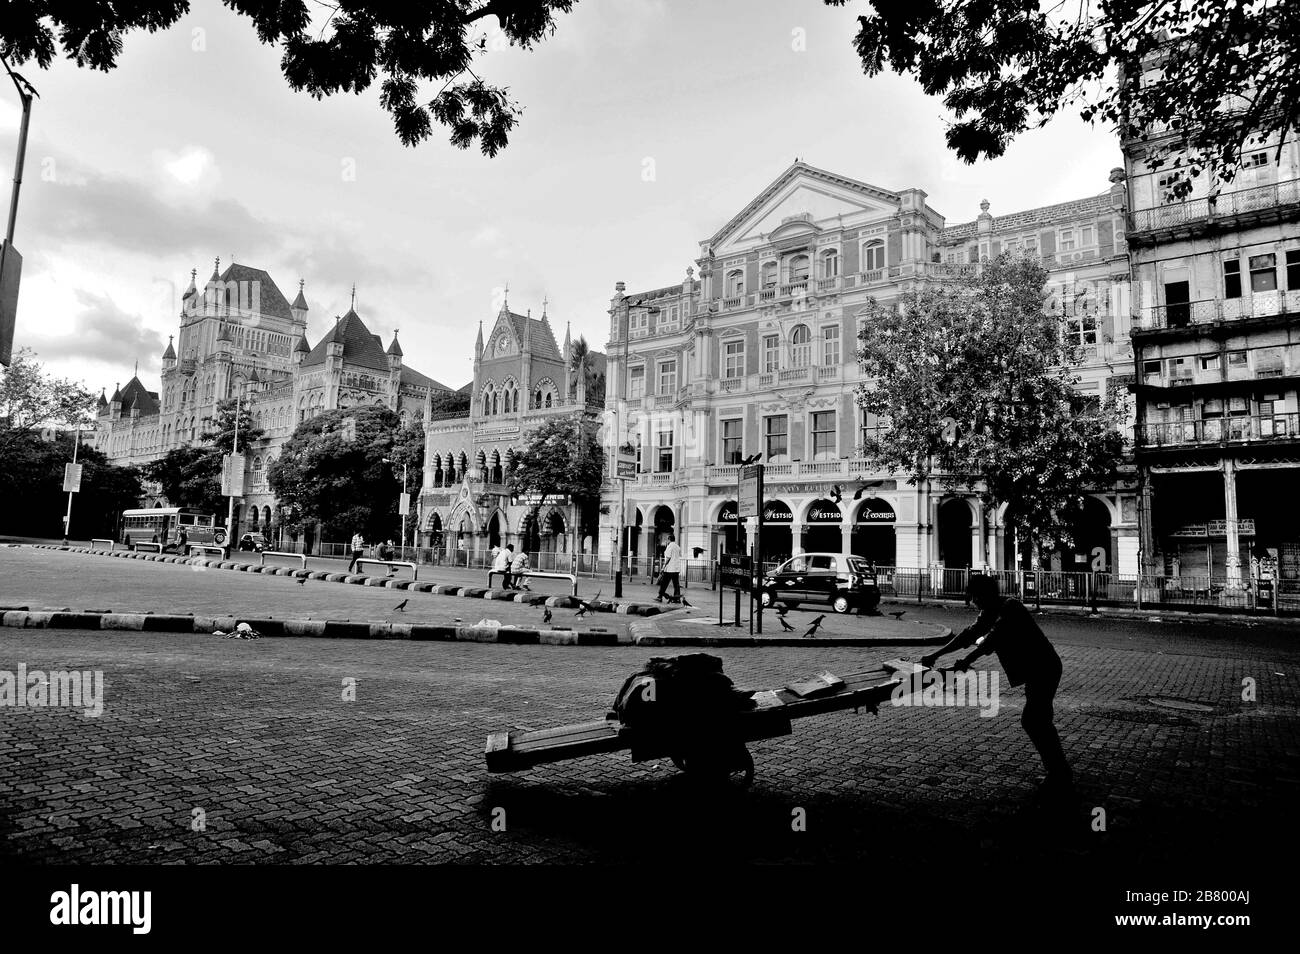 Elphinstone College, David Sassoon Library, Army and Navy Building, Esplanade Mansion, Kala Ghoda, Fort, Bombay, Mumbai, Maharashtra, India, Asia Stock Photo